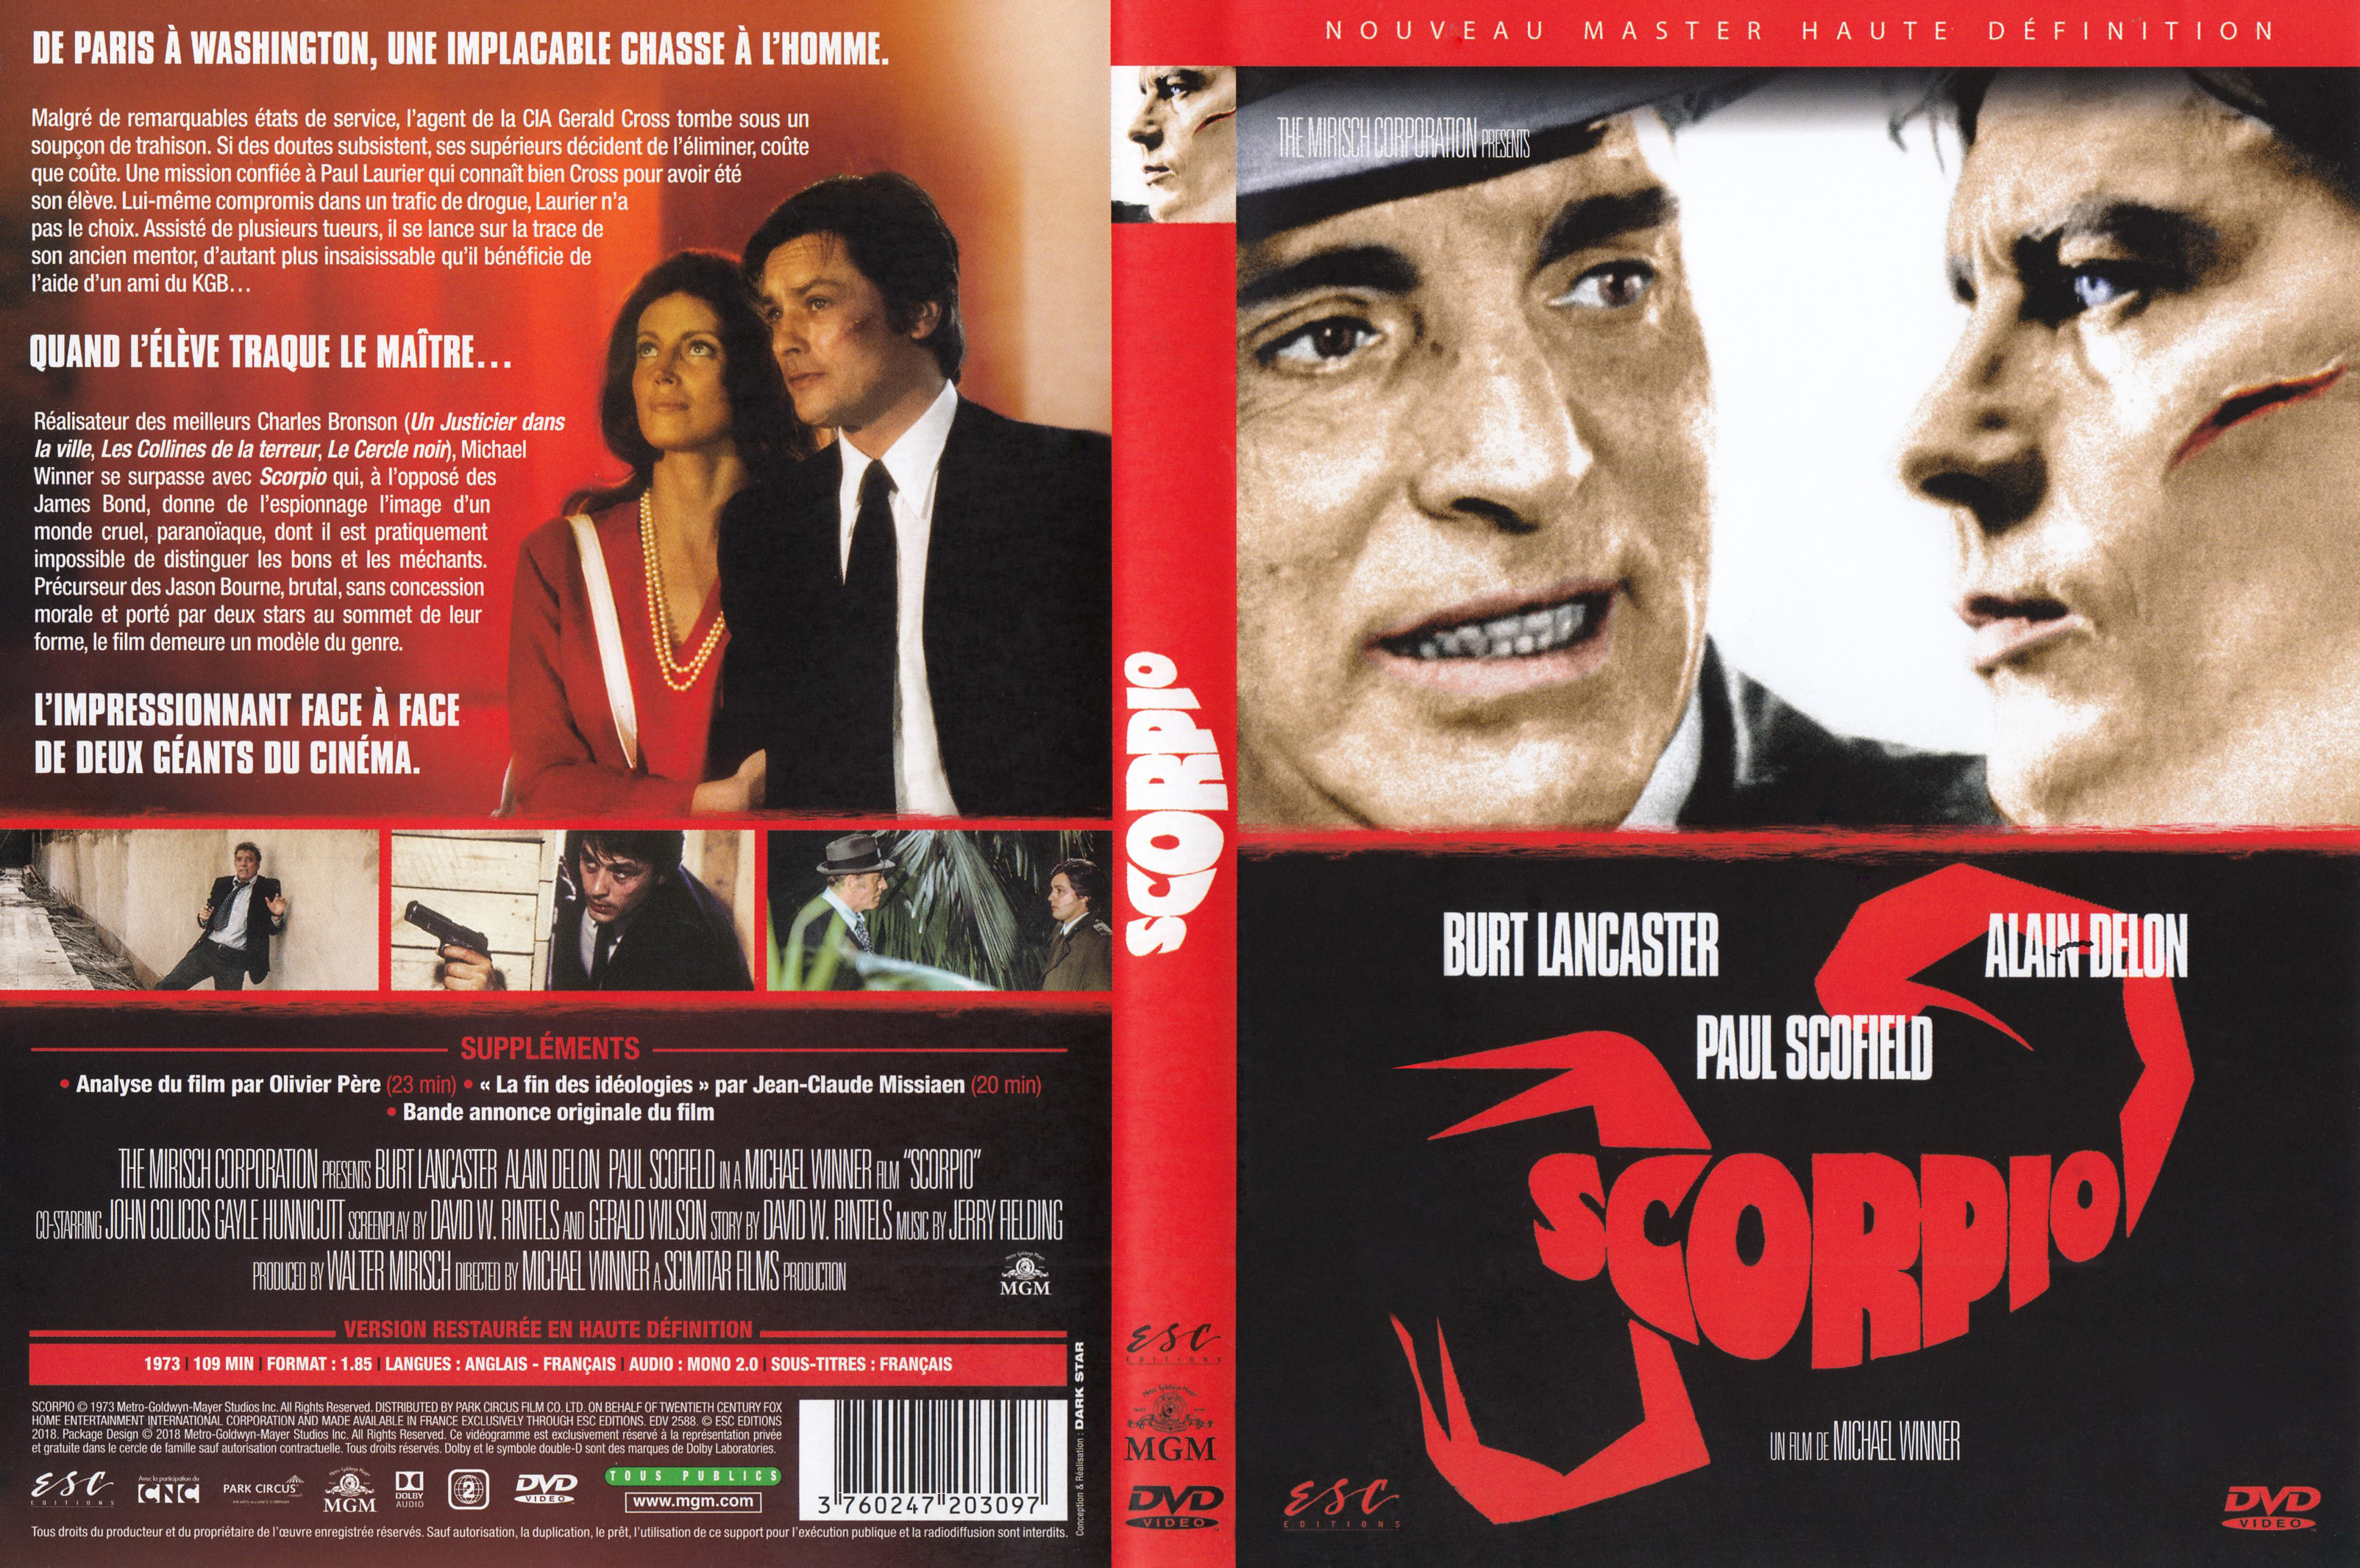 Jaquette DVD Scorpio v2